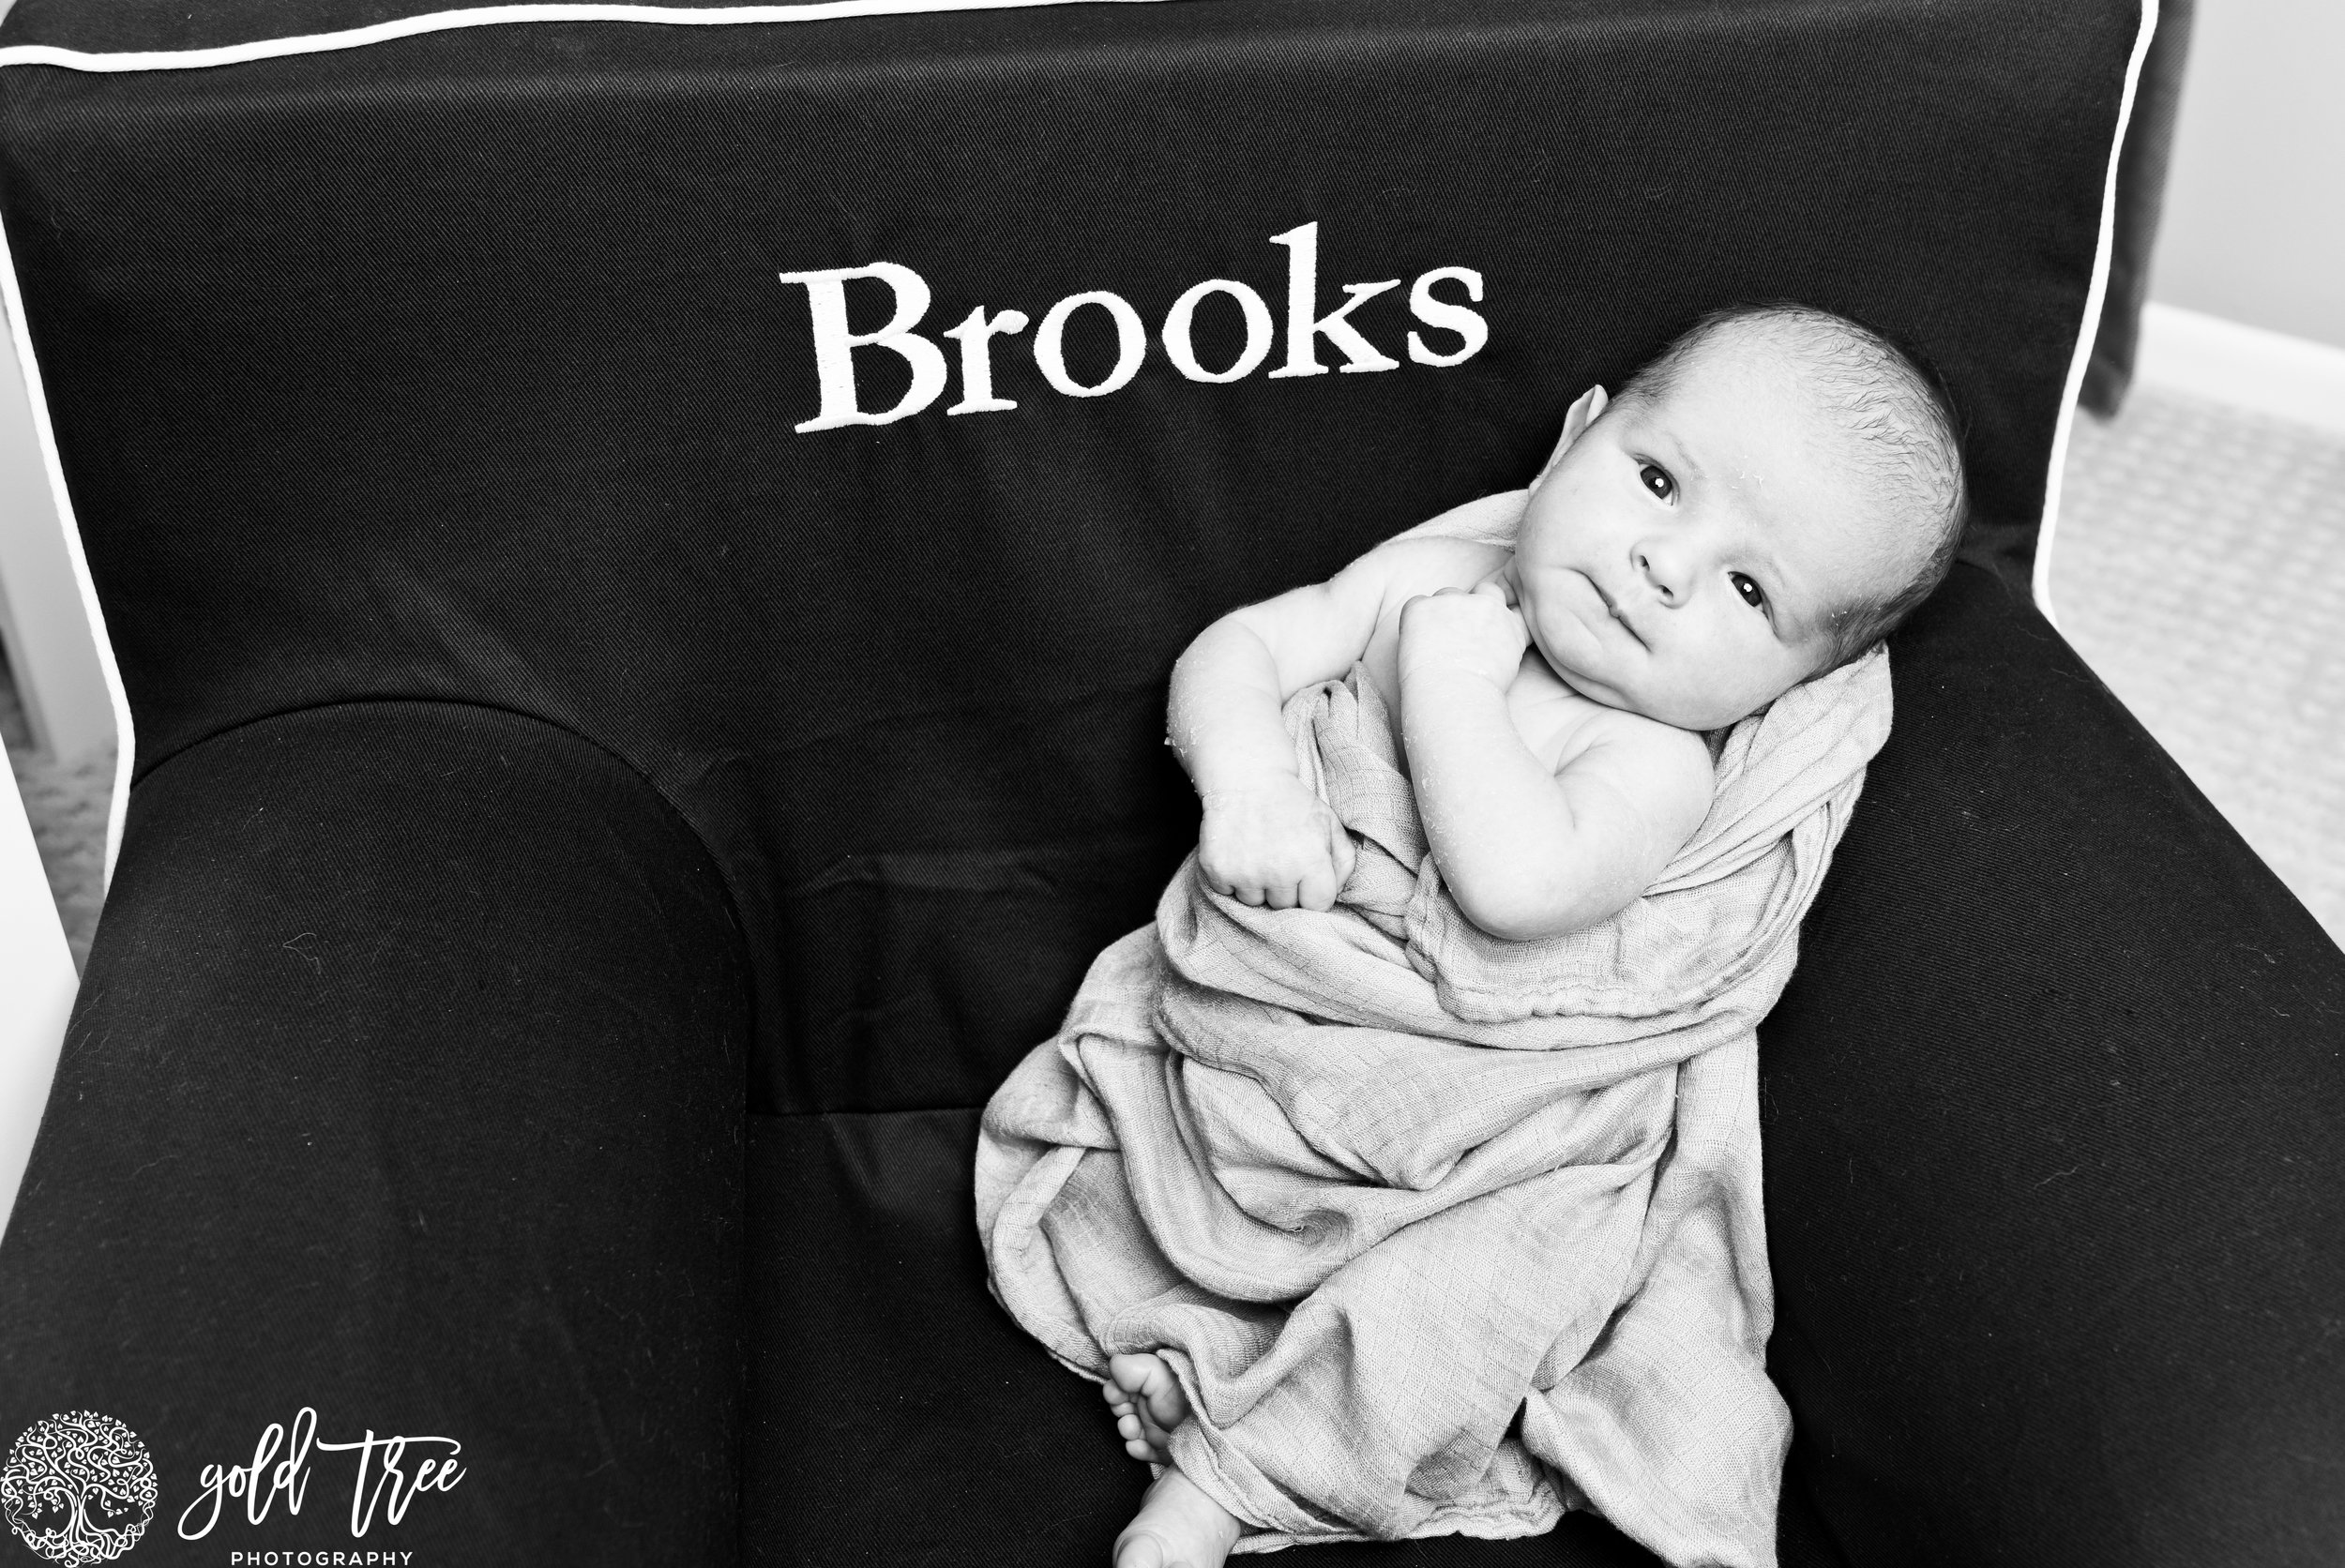 Brookslogo30-GOLDTREEPHOTOGRAPHY-1.jpg